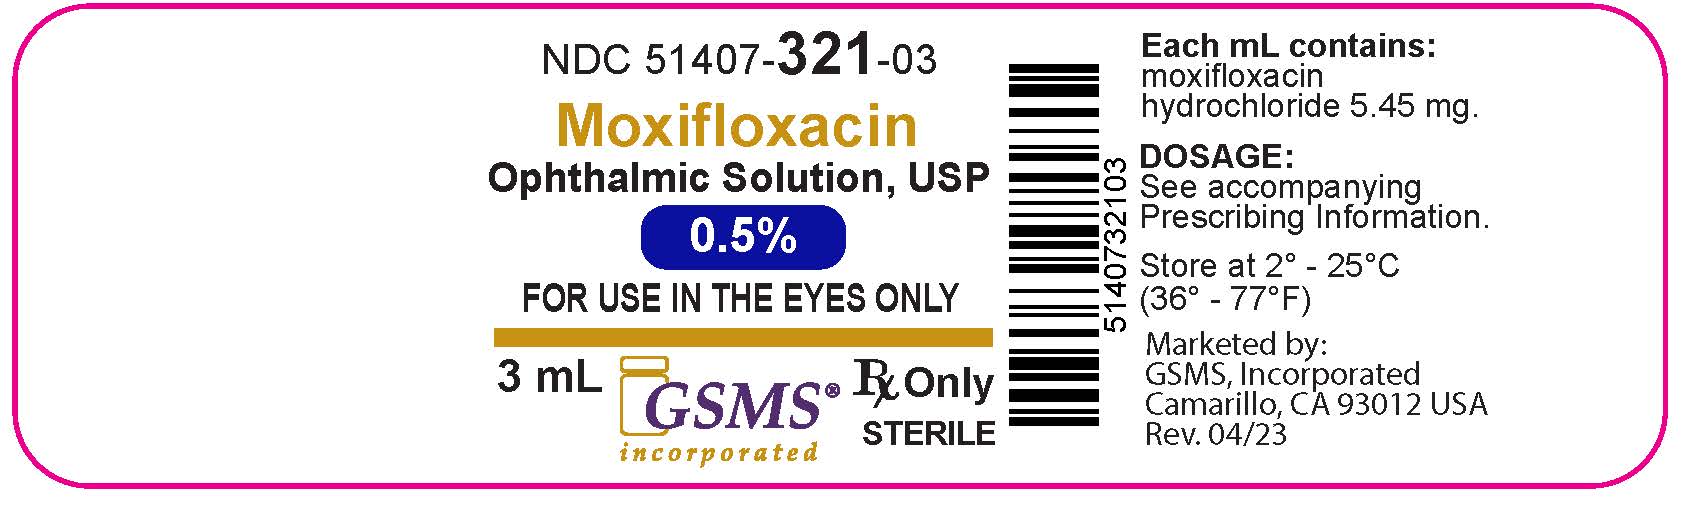 5107-321-03OL - Moxifloxacin Ophthalmic Solution 5 3mL - Rev 04-22.jpg